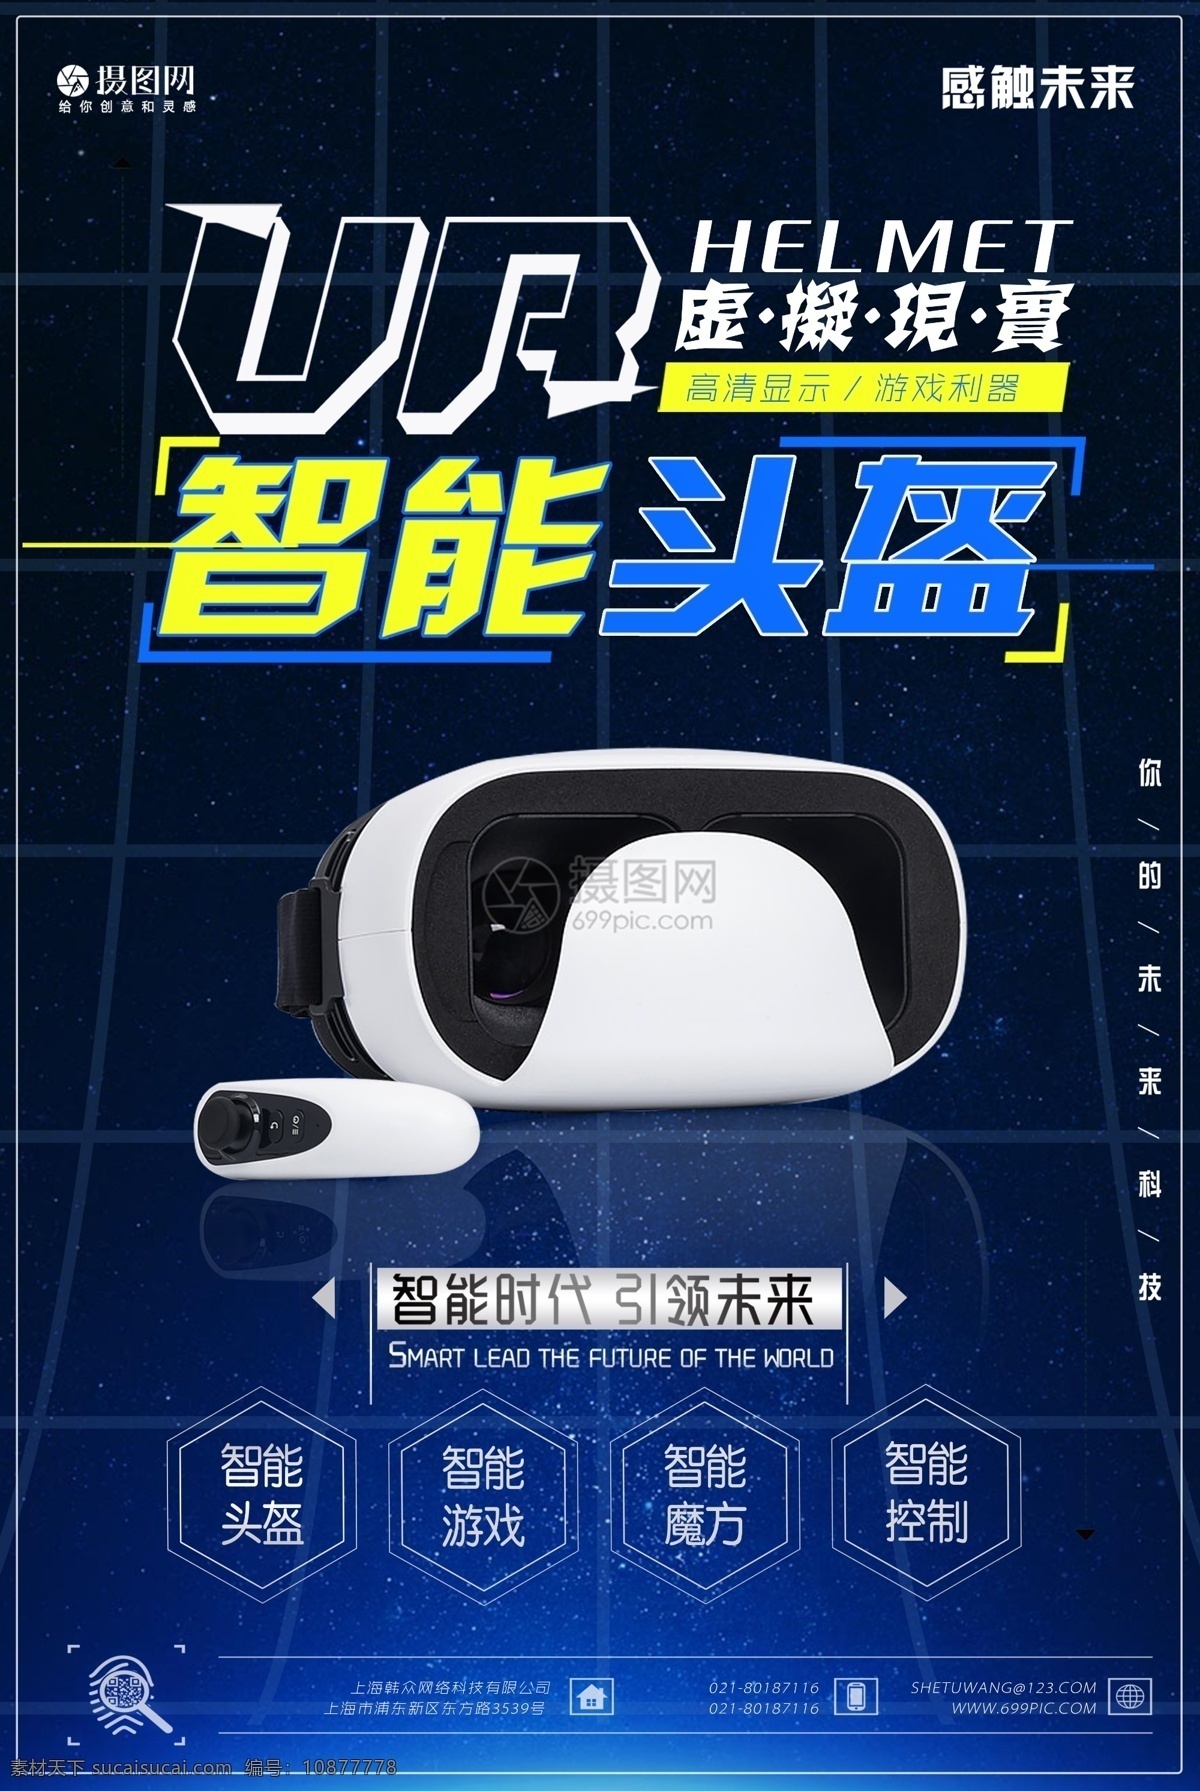 vr 虚拟现实 智能 时代 引领 未来 科技 海报 3d 视频 视界 全景 体验 头盔 控制